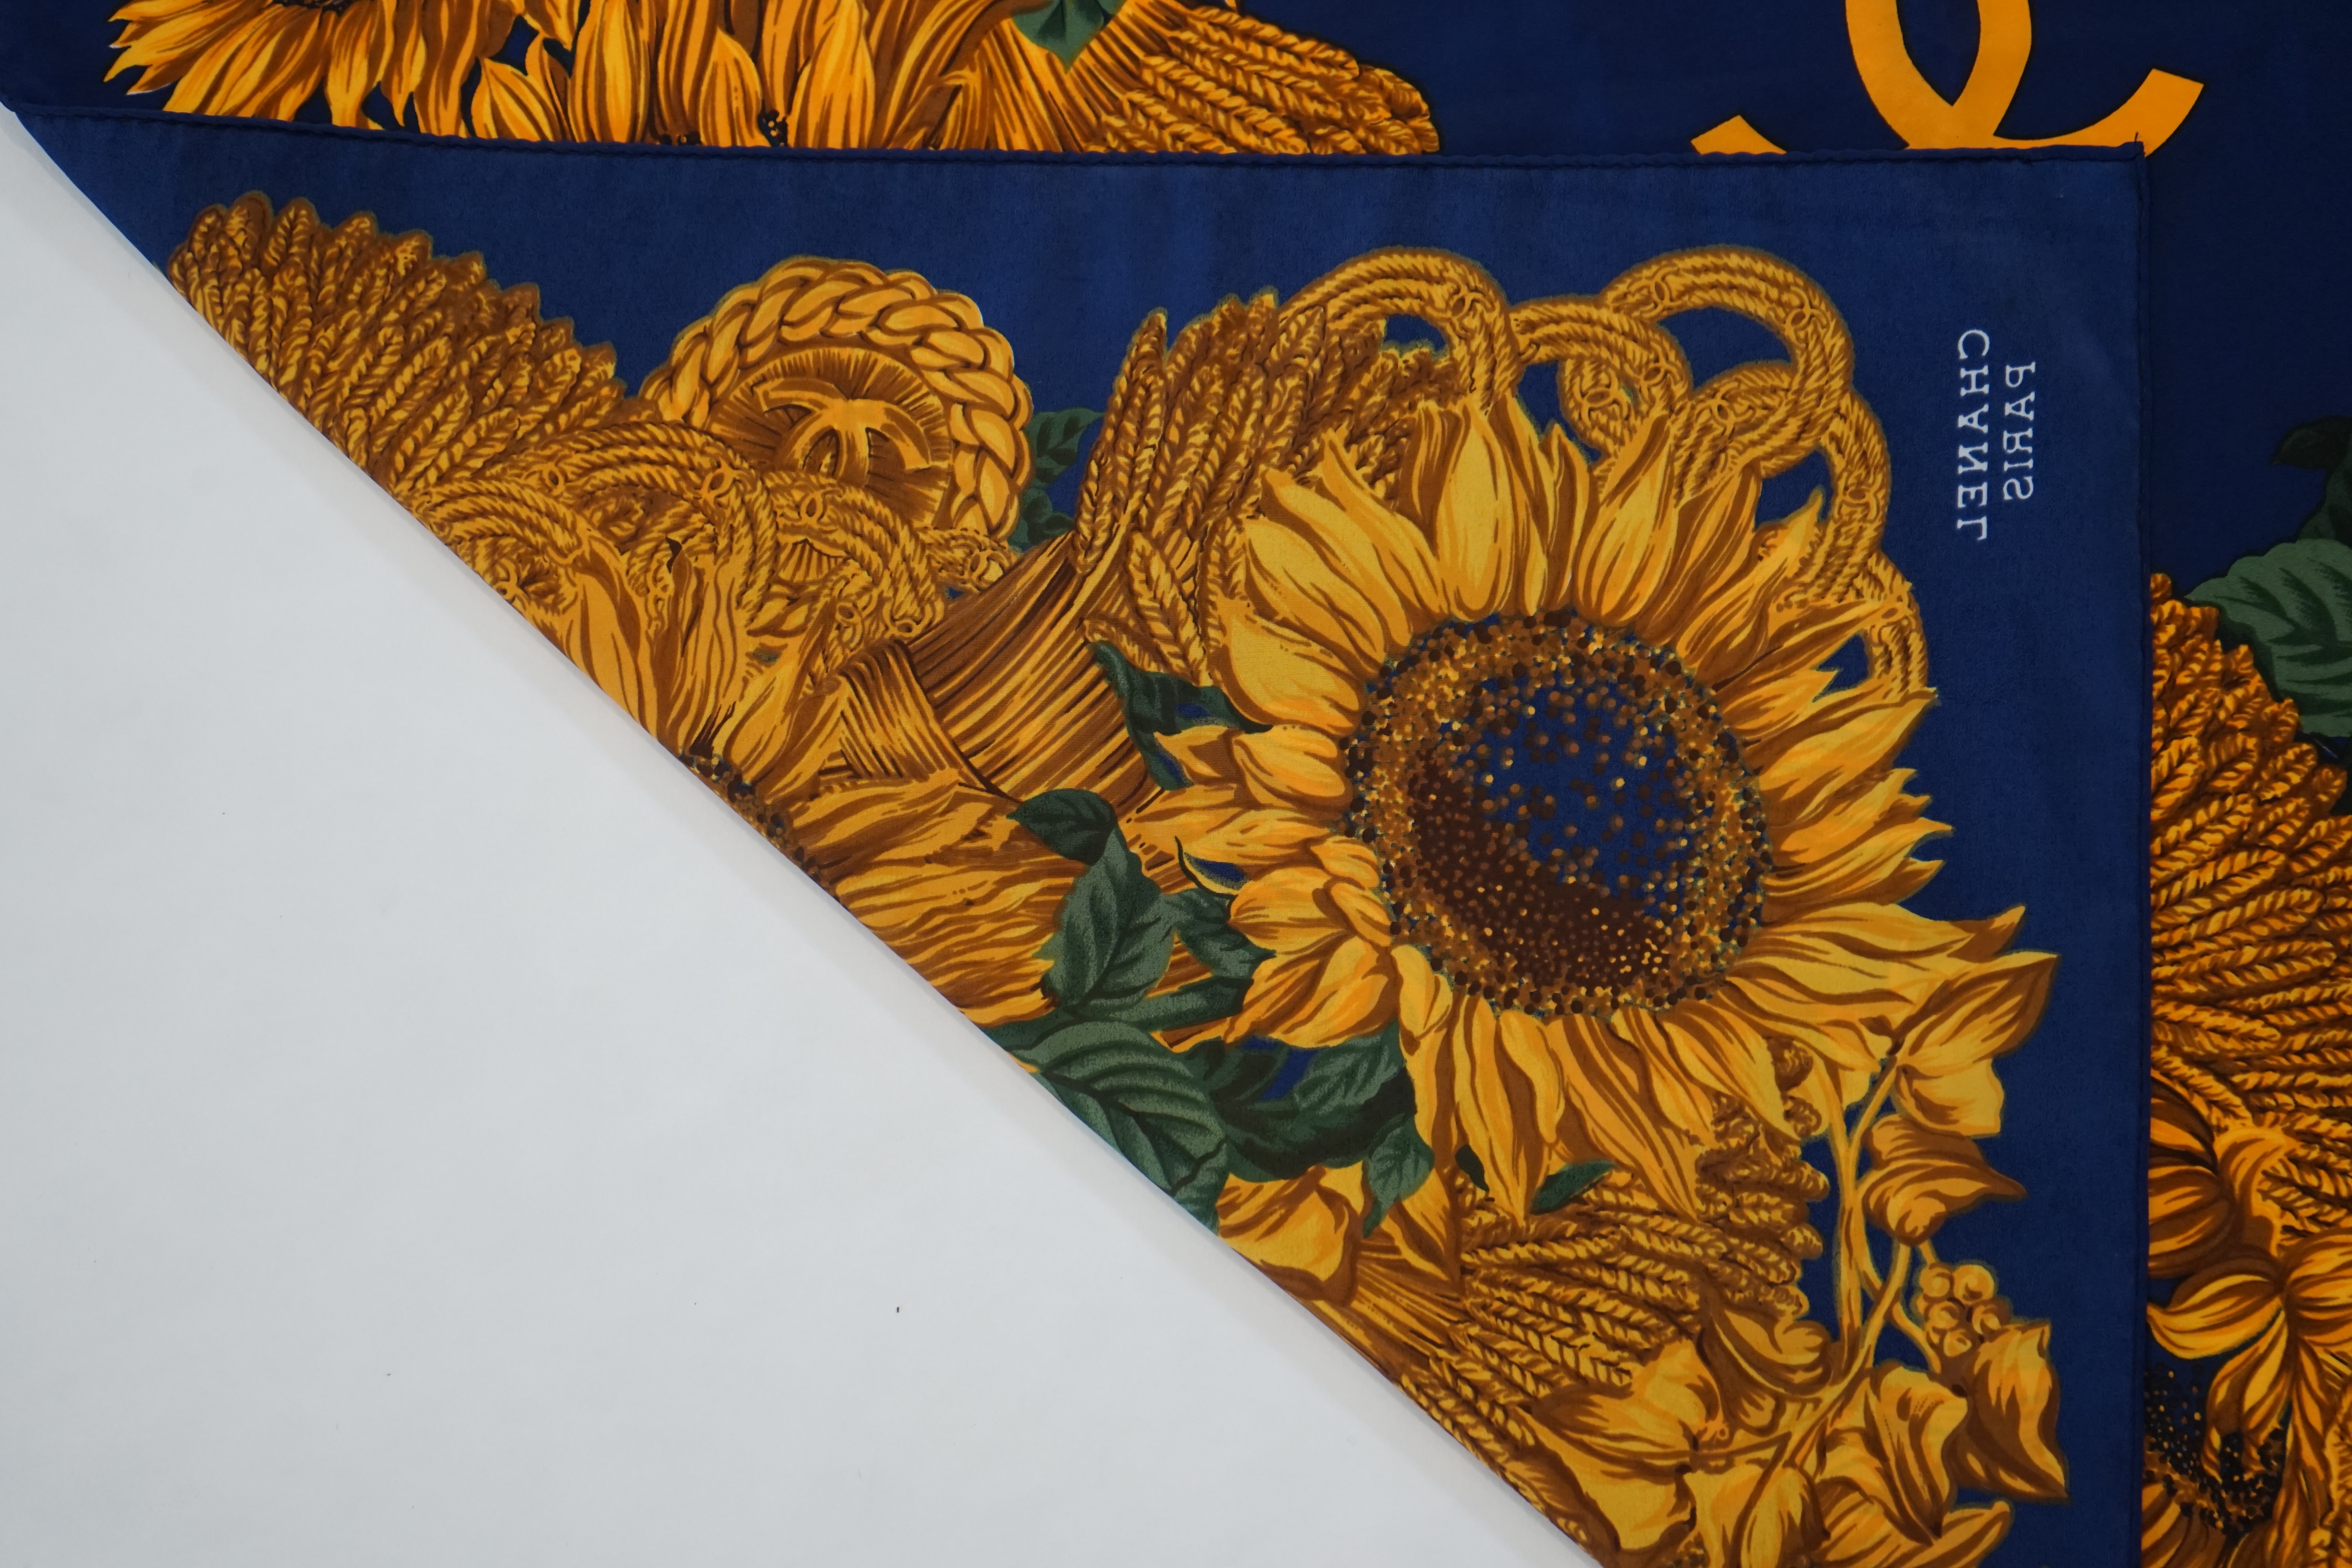 A Vintage Chanel Logo Floral Sunflowers silk scarf, width 86.5cm, height 87.5cm